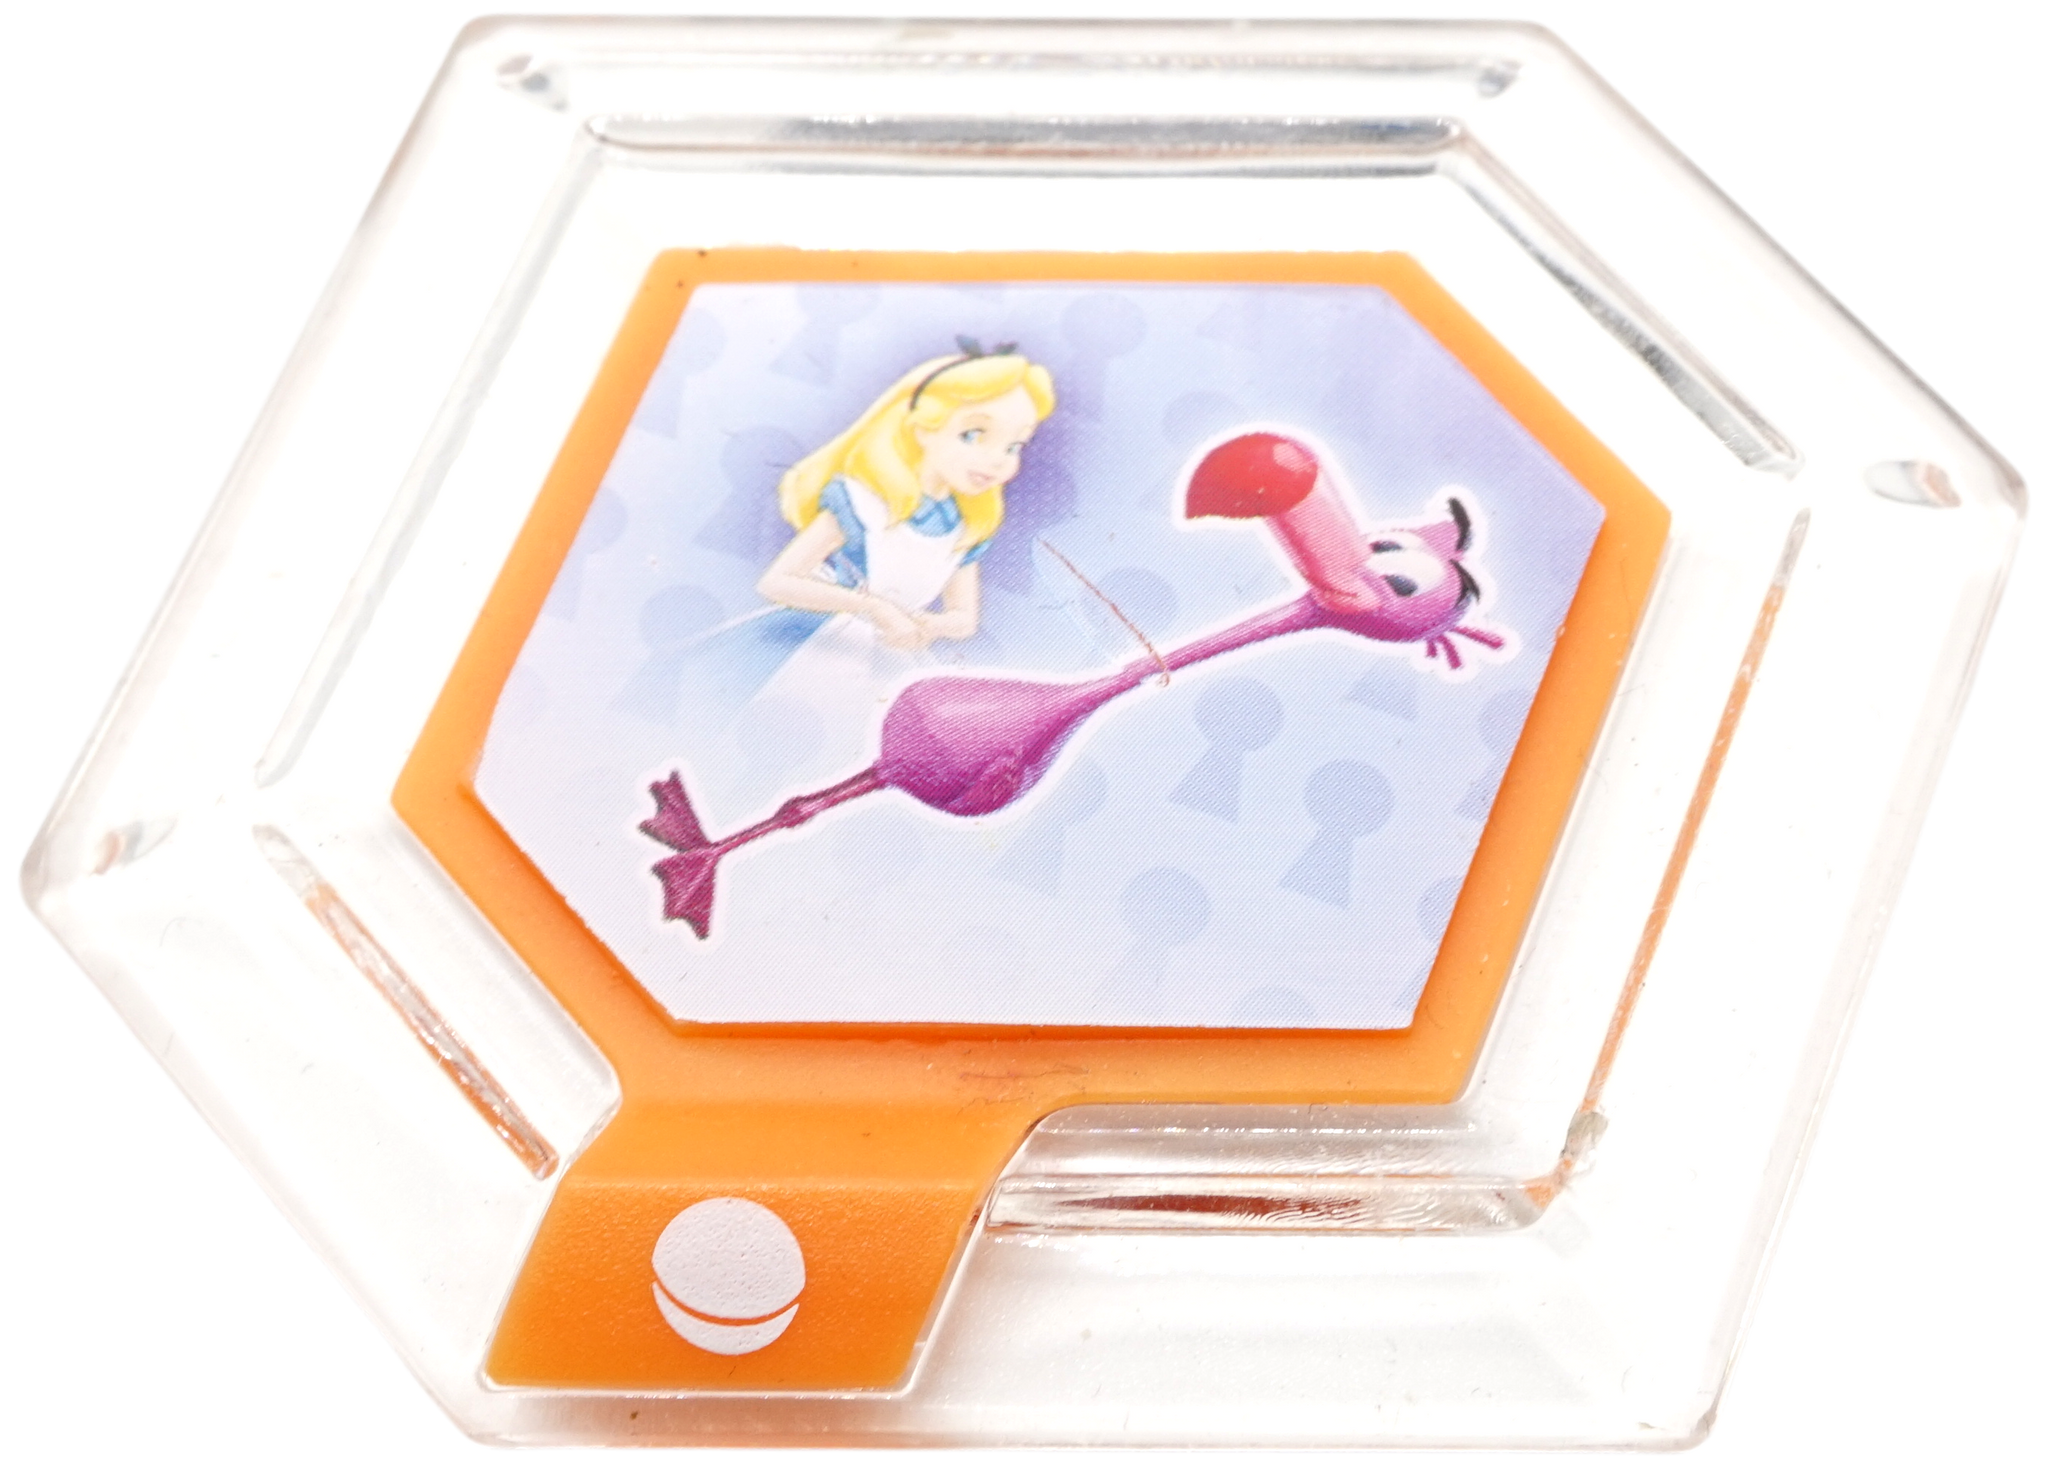 Flamingo Croquet Mallet - Disney Infinity 1.0